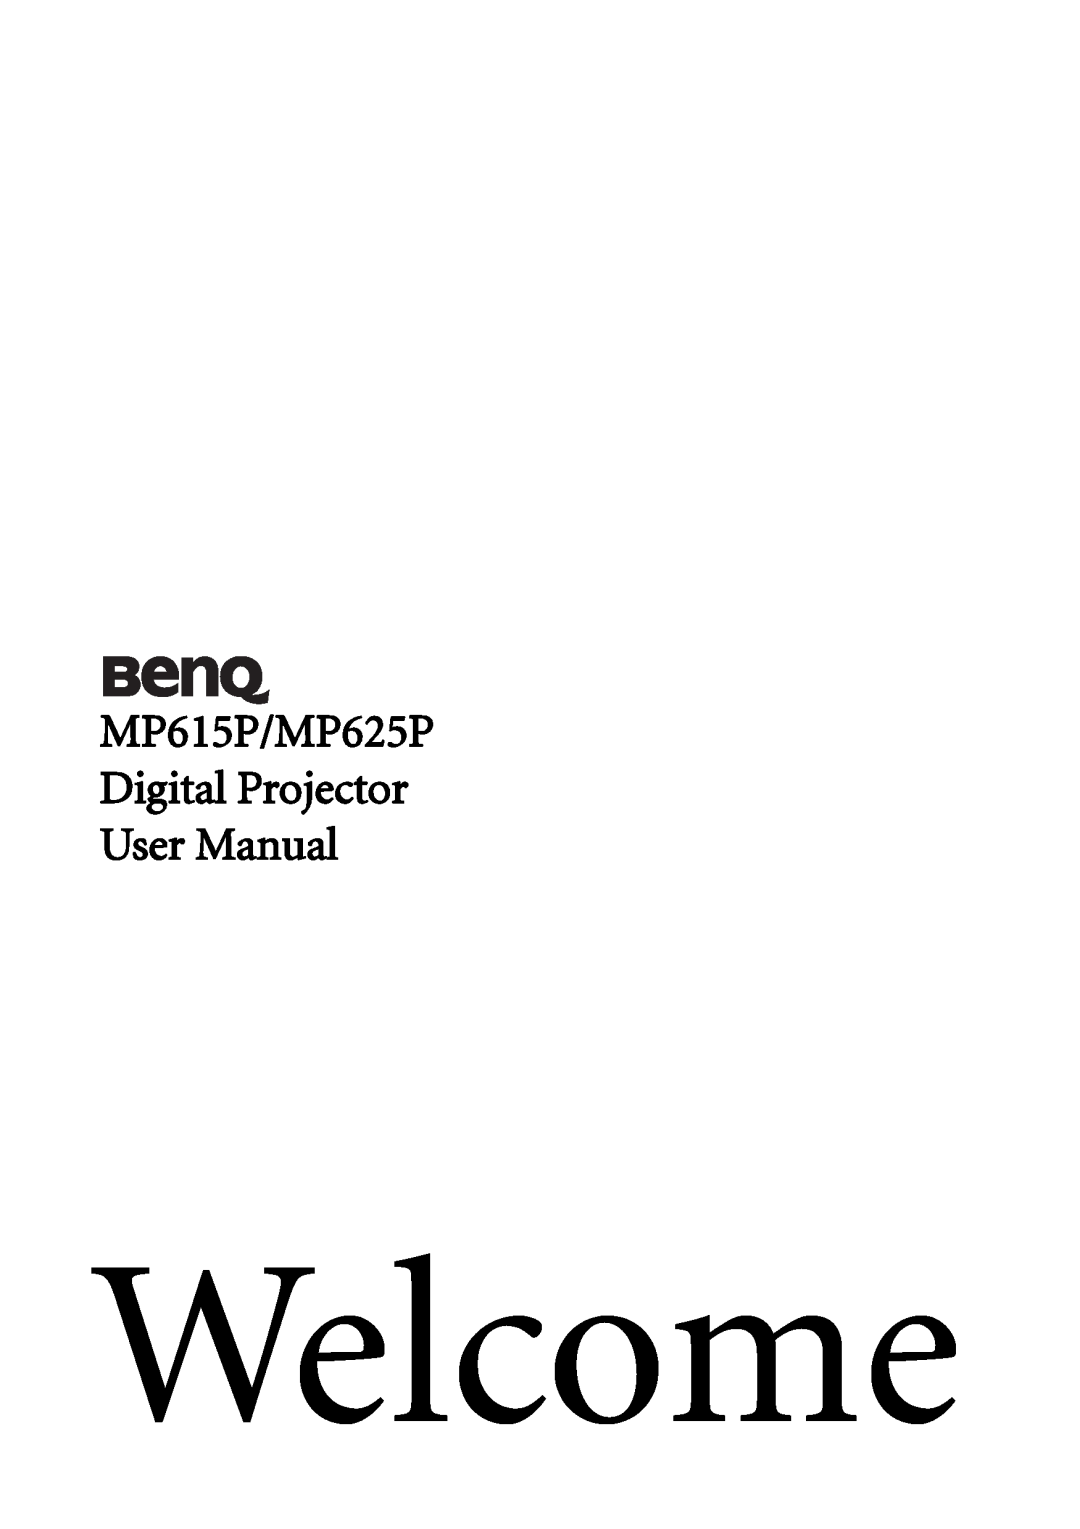 BenQ user manual MP615P/MP625P Digital Projector User Manual, Welcome 